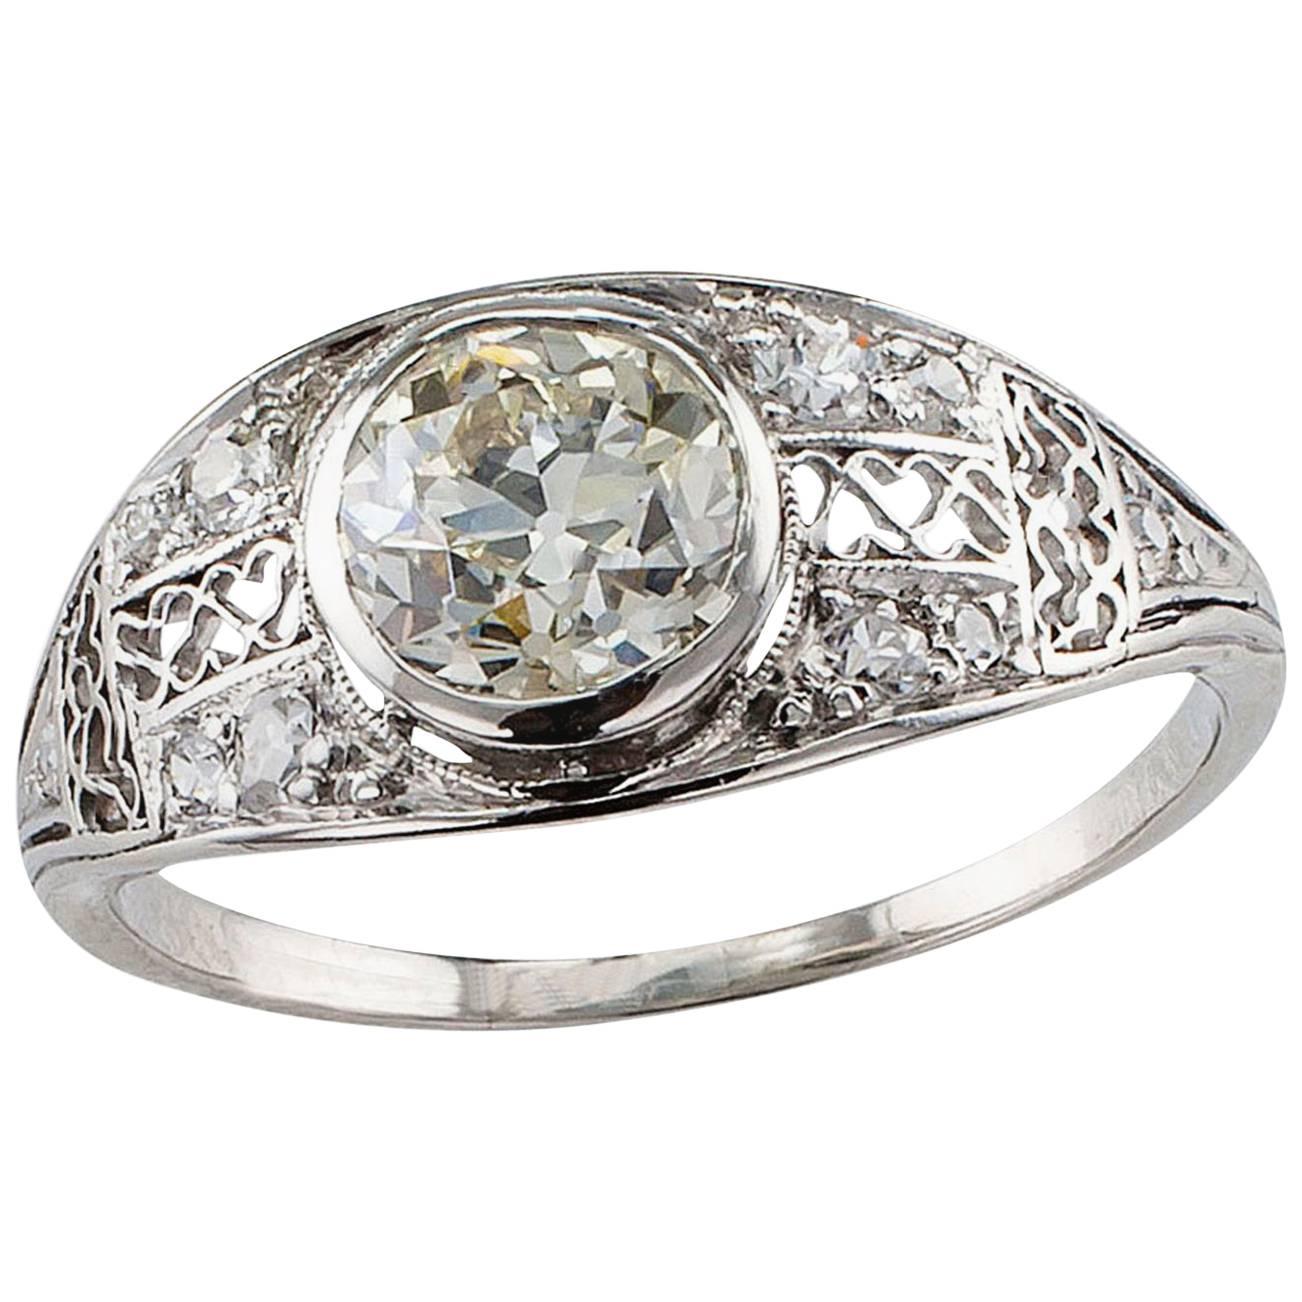 Edwardian 1.05 Carat Diamond Platinum Engagement Ring